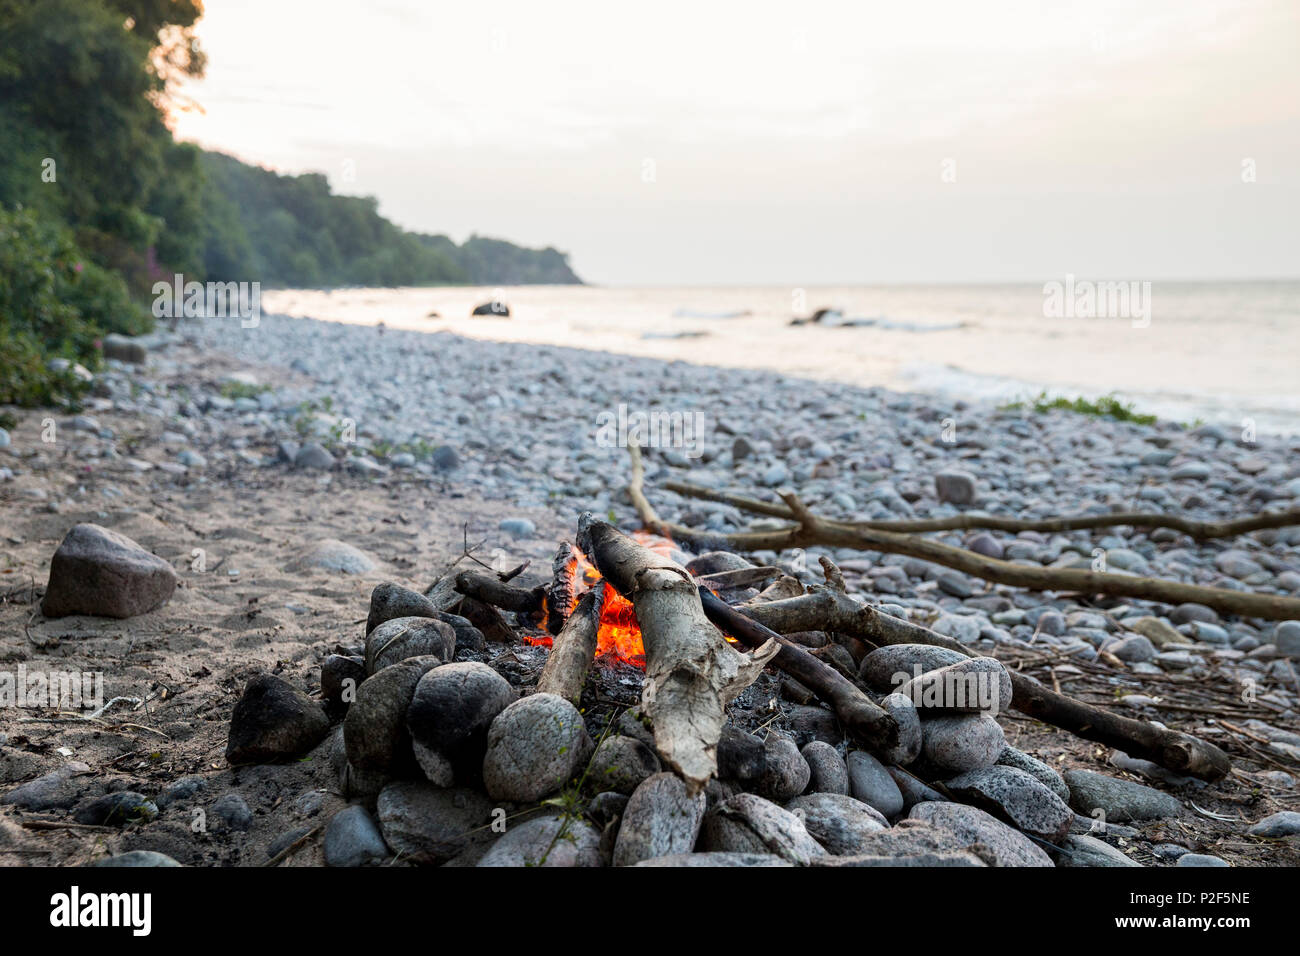 Campfire on the beach, adventure, outdoor, holiday, Baltic sea, Bornholm, near Gudhjem, Denmark, Europe Stock Photo